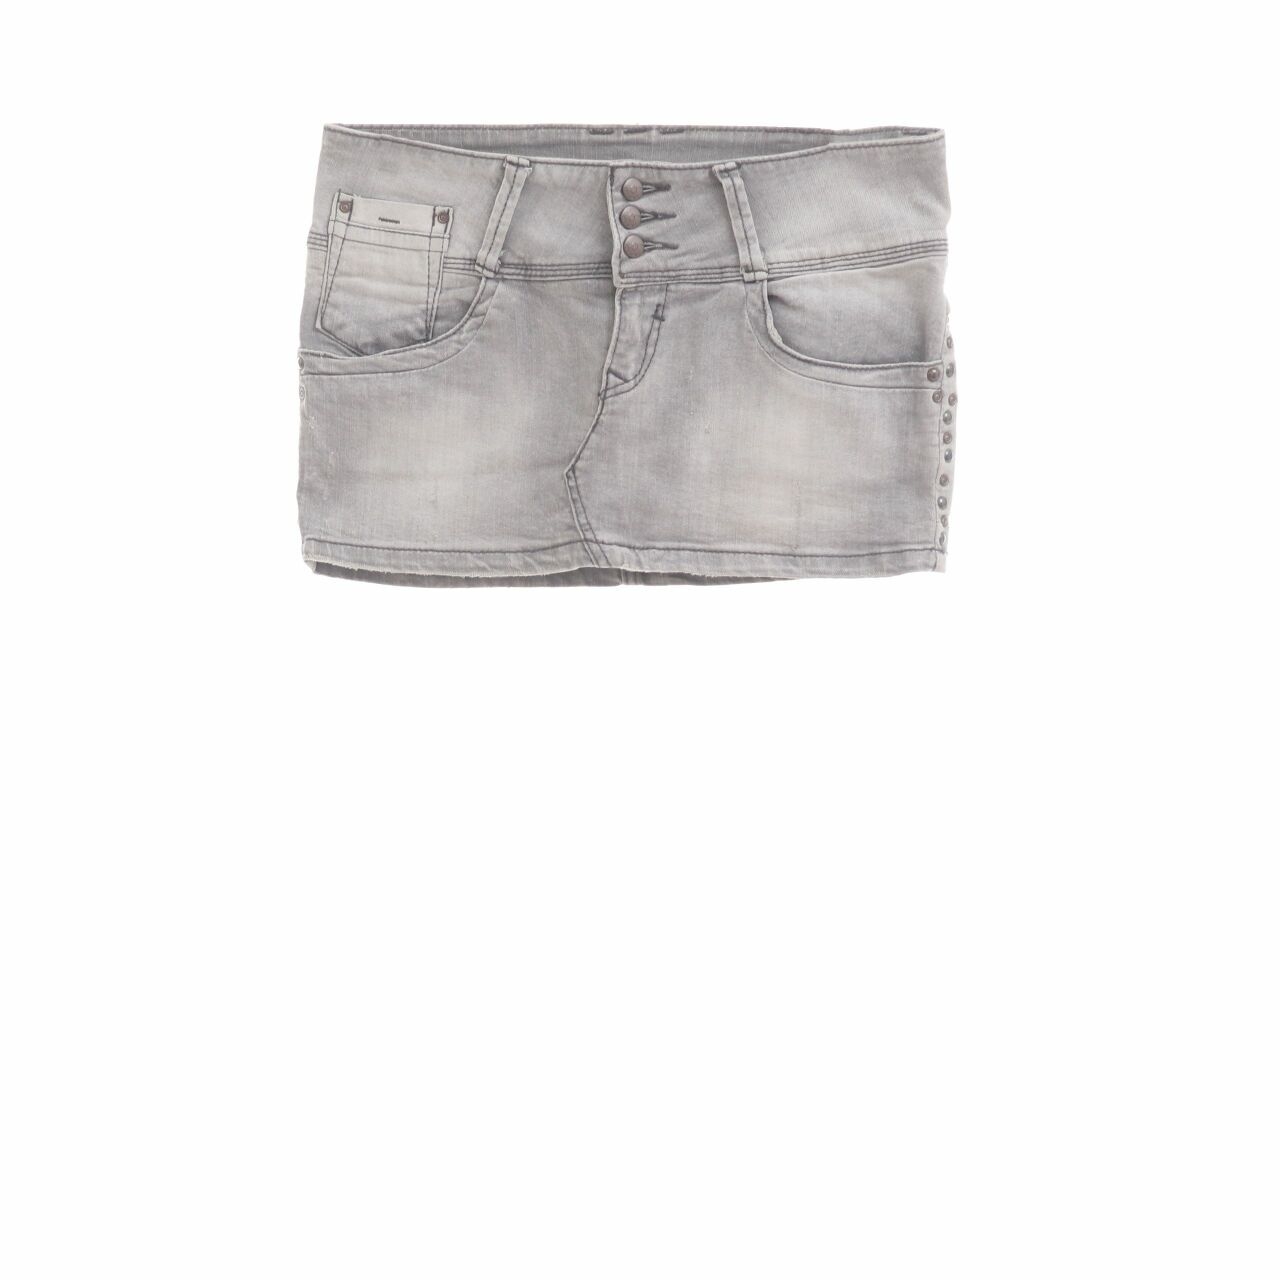 Zara Light Grey Mini Skirt